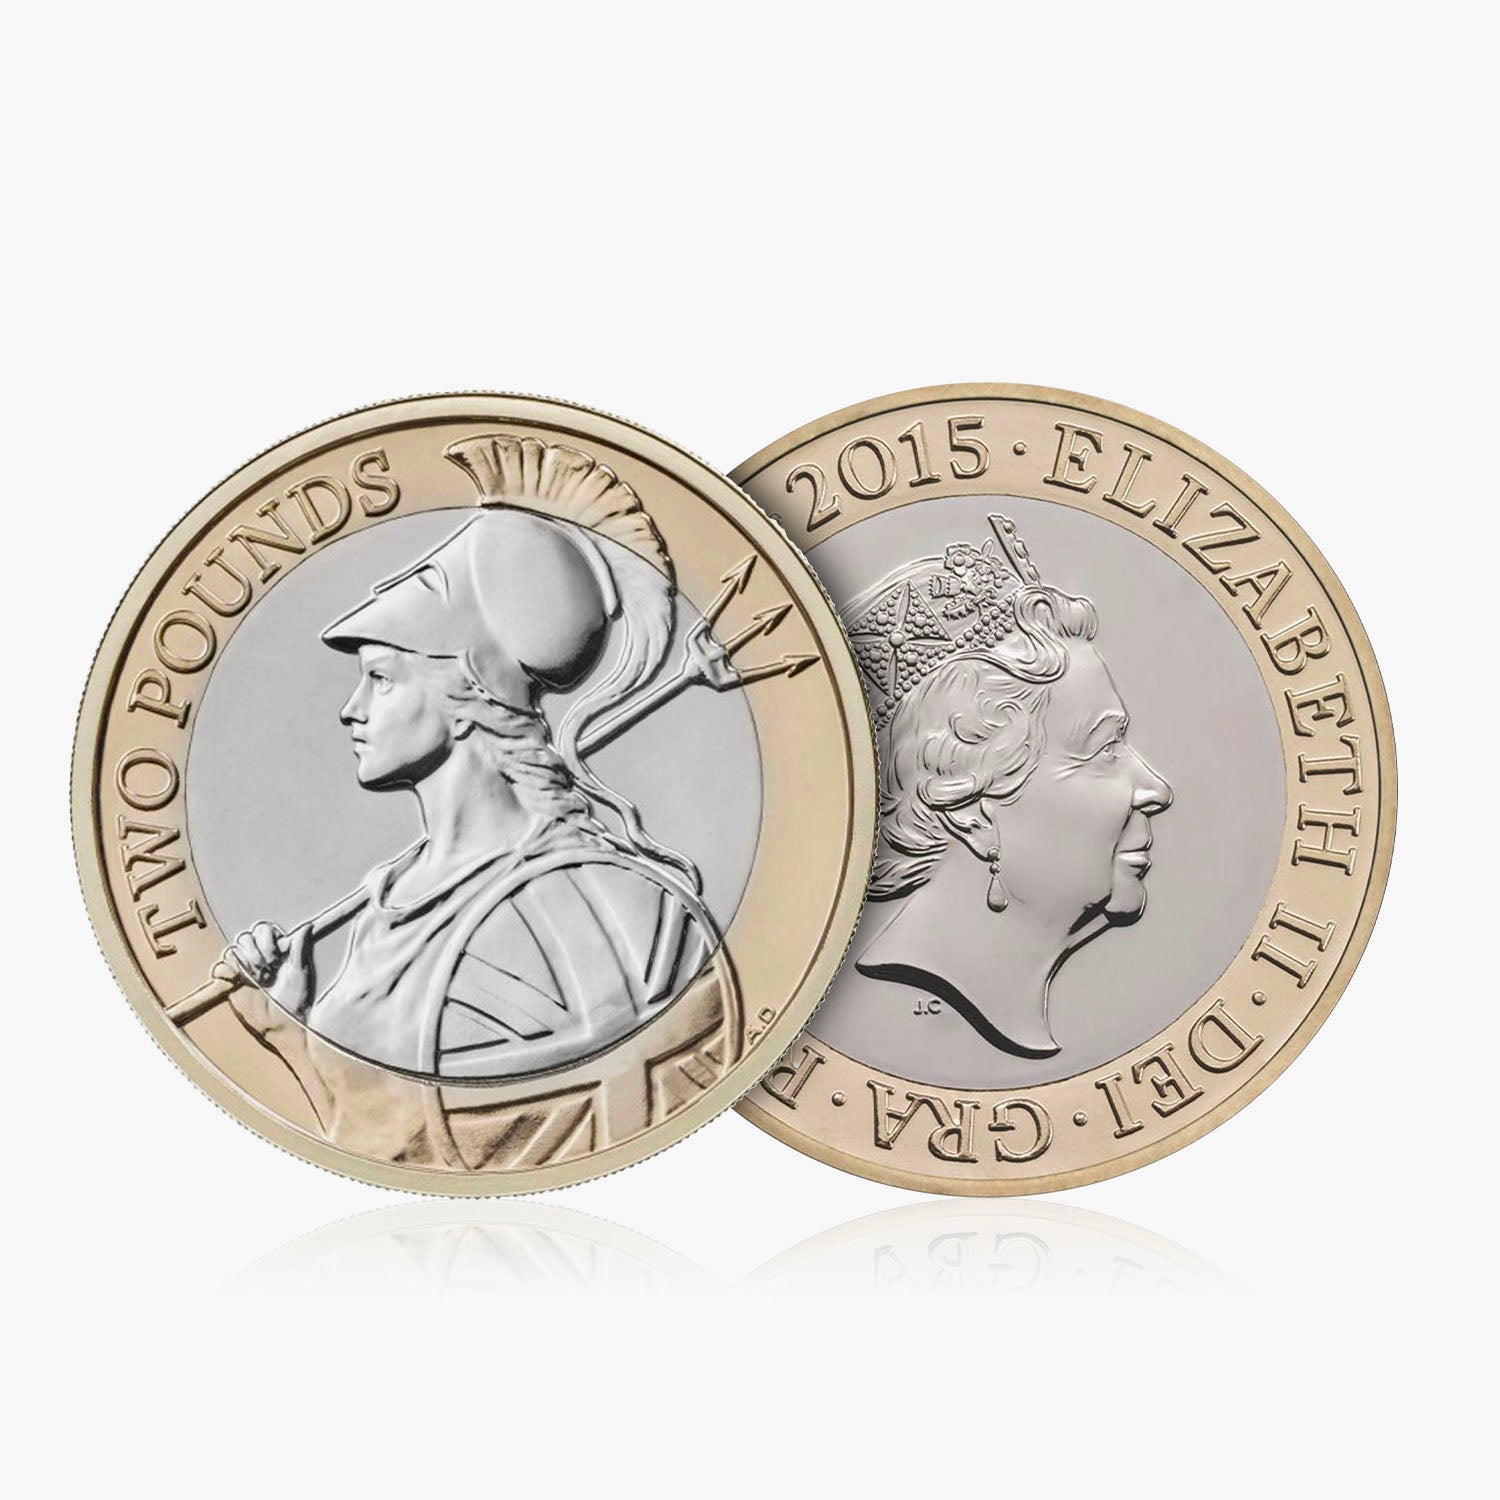 2015 Circulated New Britannia UK £2 Coin